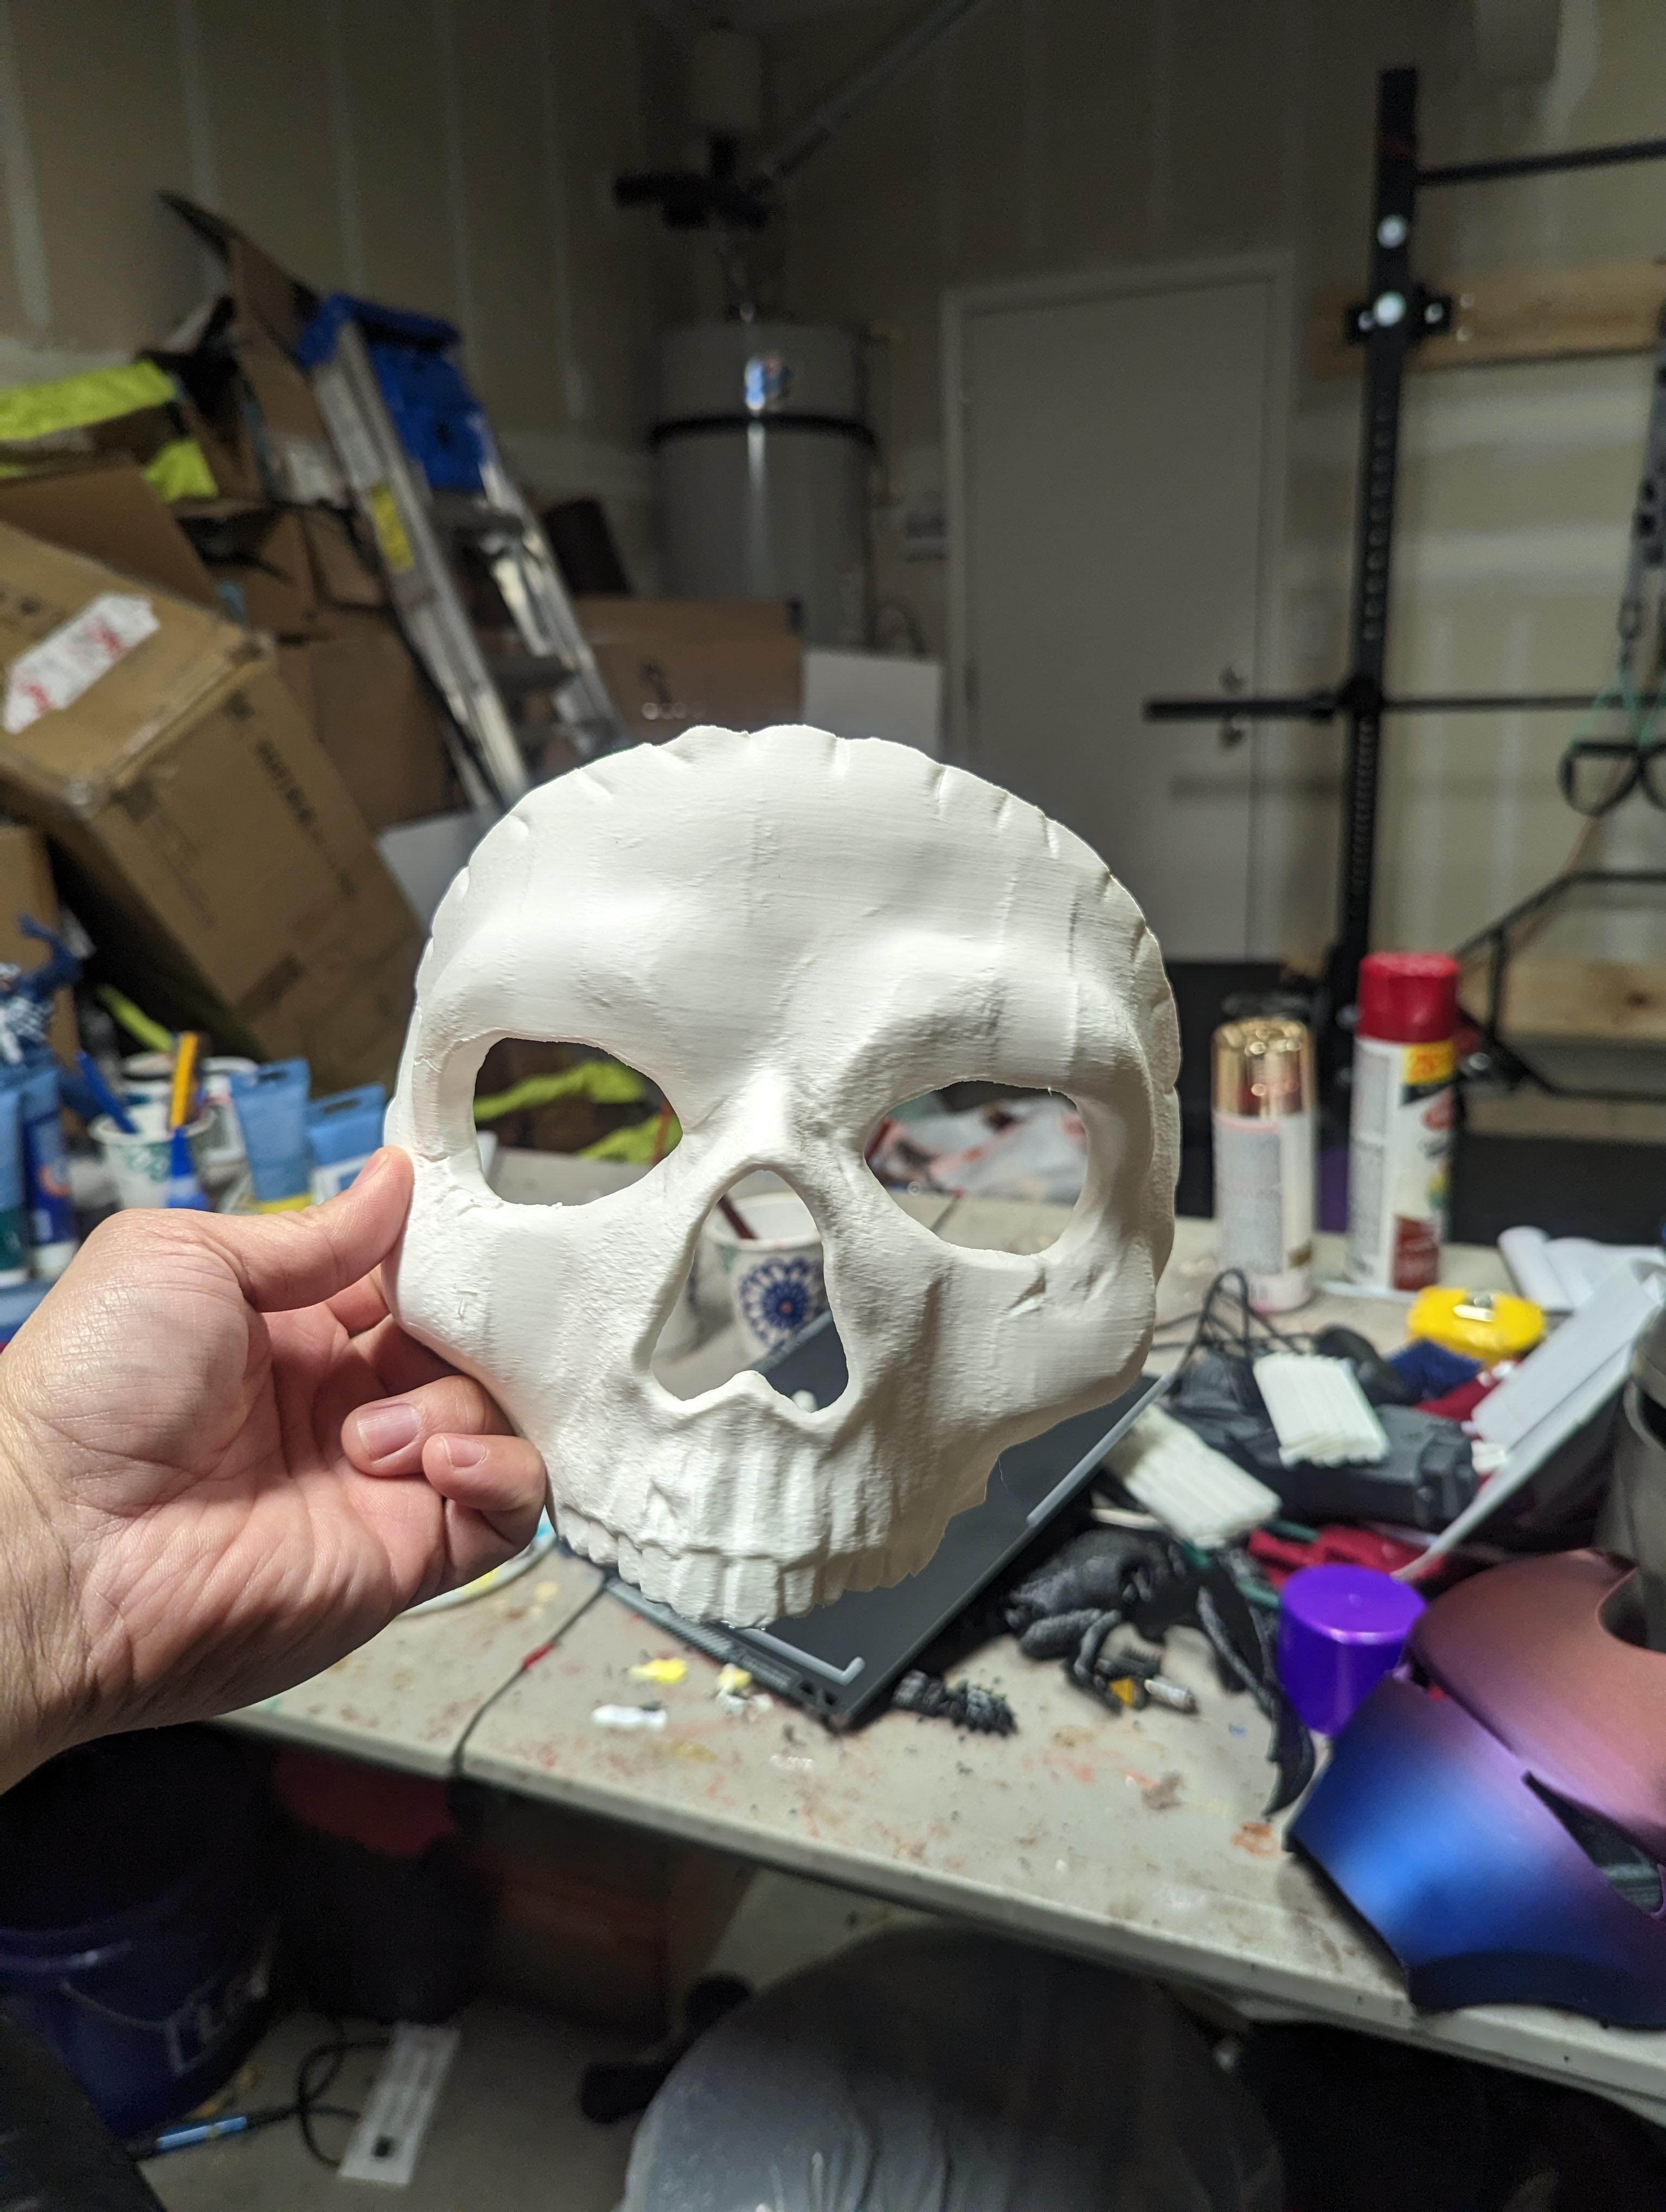 CoD Ghost Mask 3d model